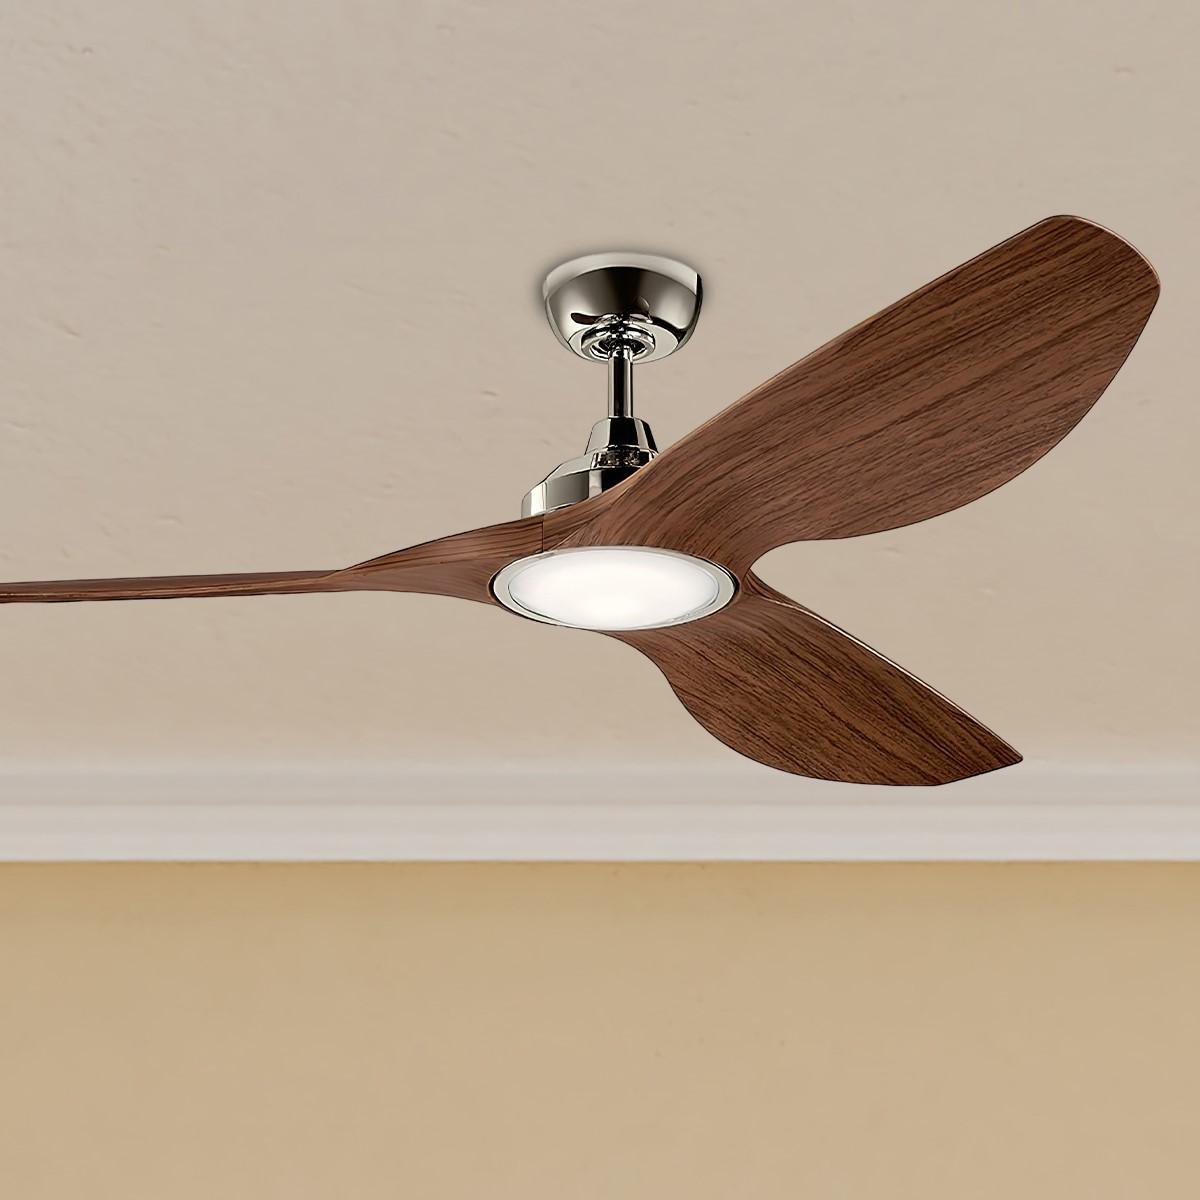 Imari 65 Inch Propeller Indoor/Outdoor Ceiling Fan With Light, Wall Control Included - Bees Lighting